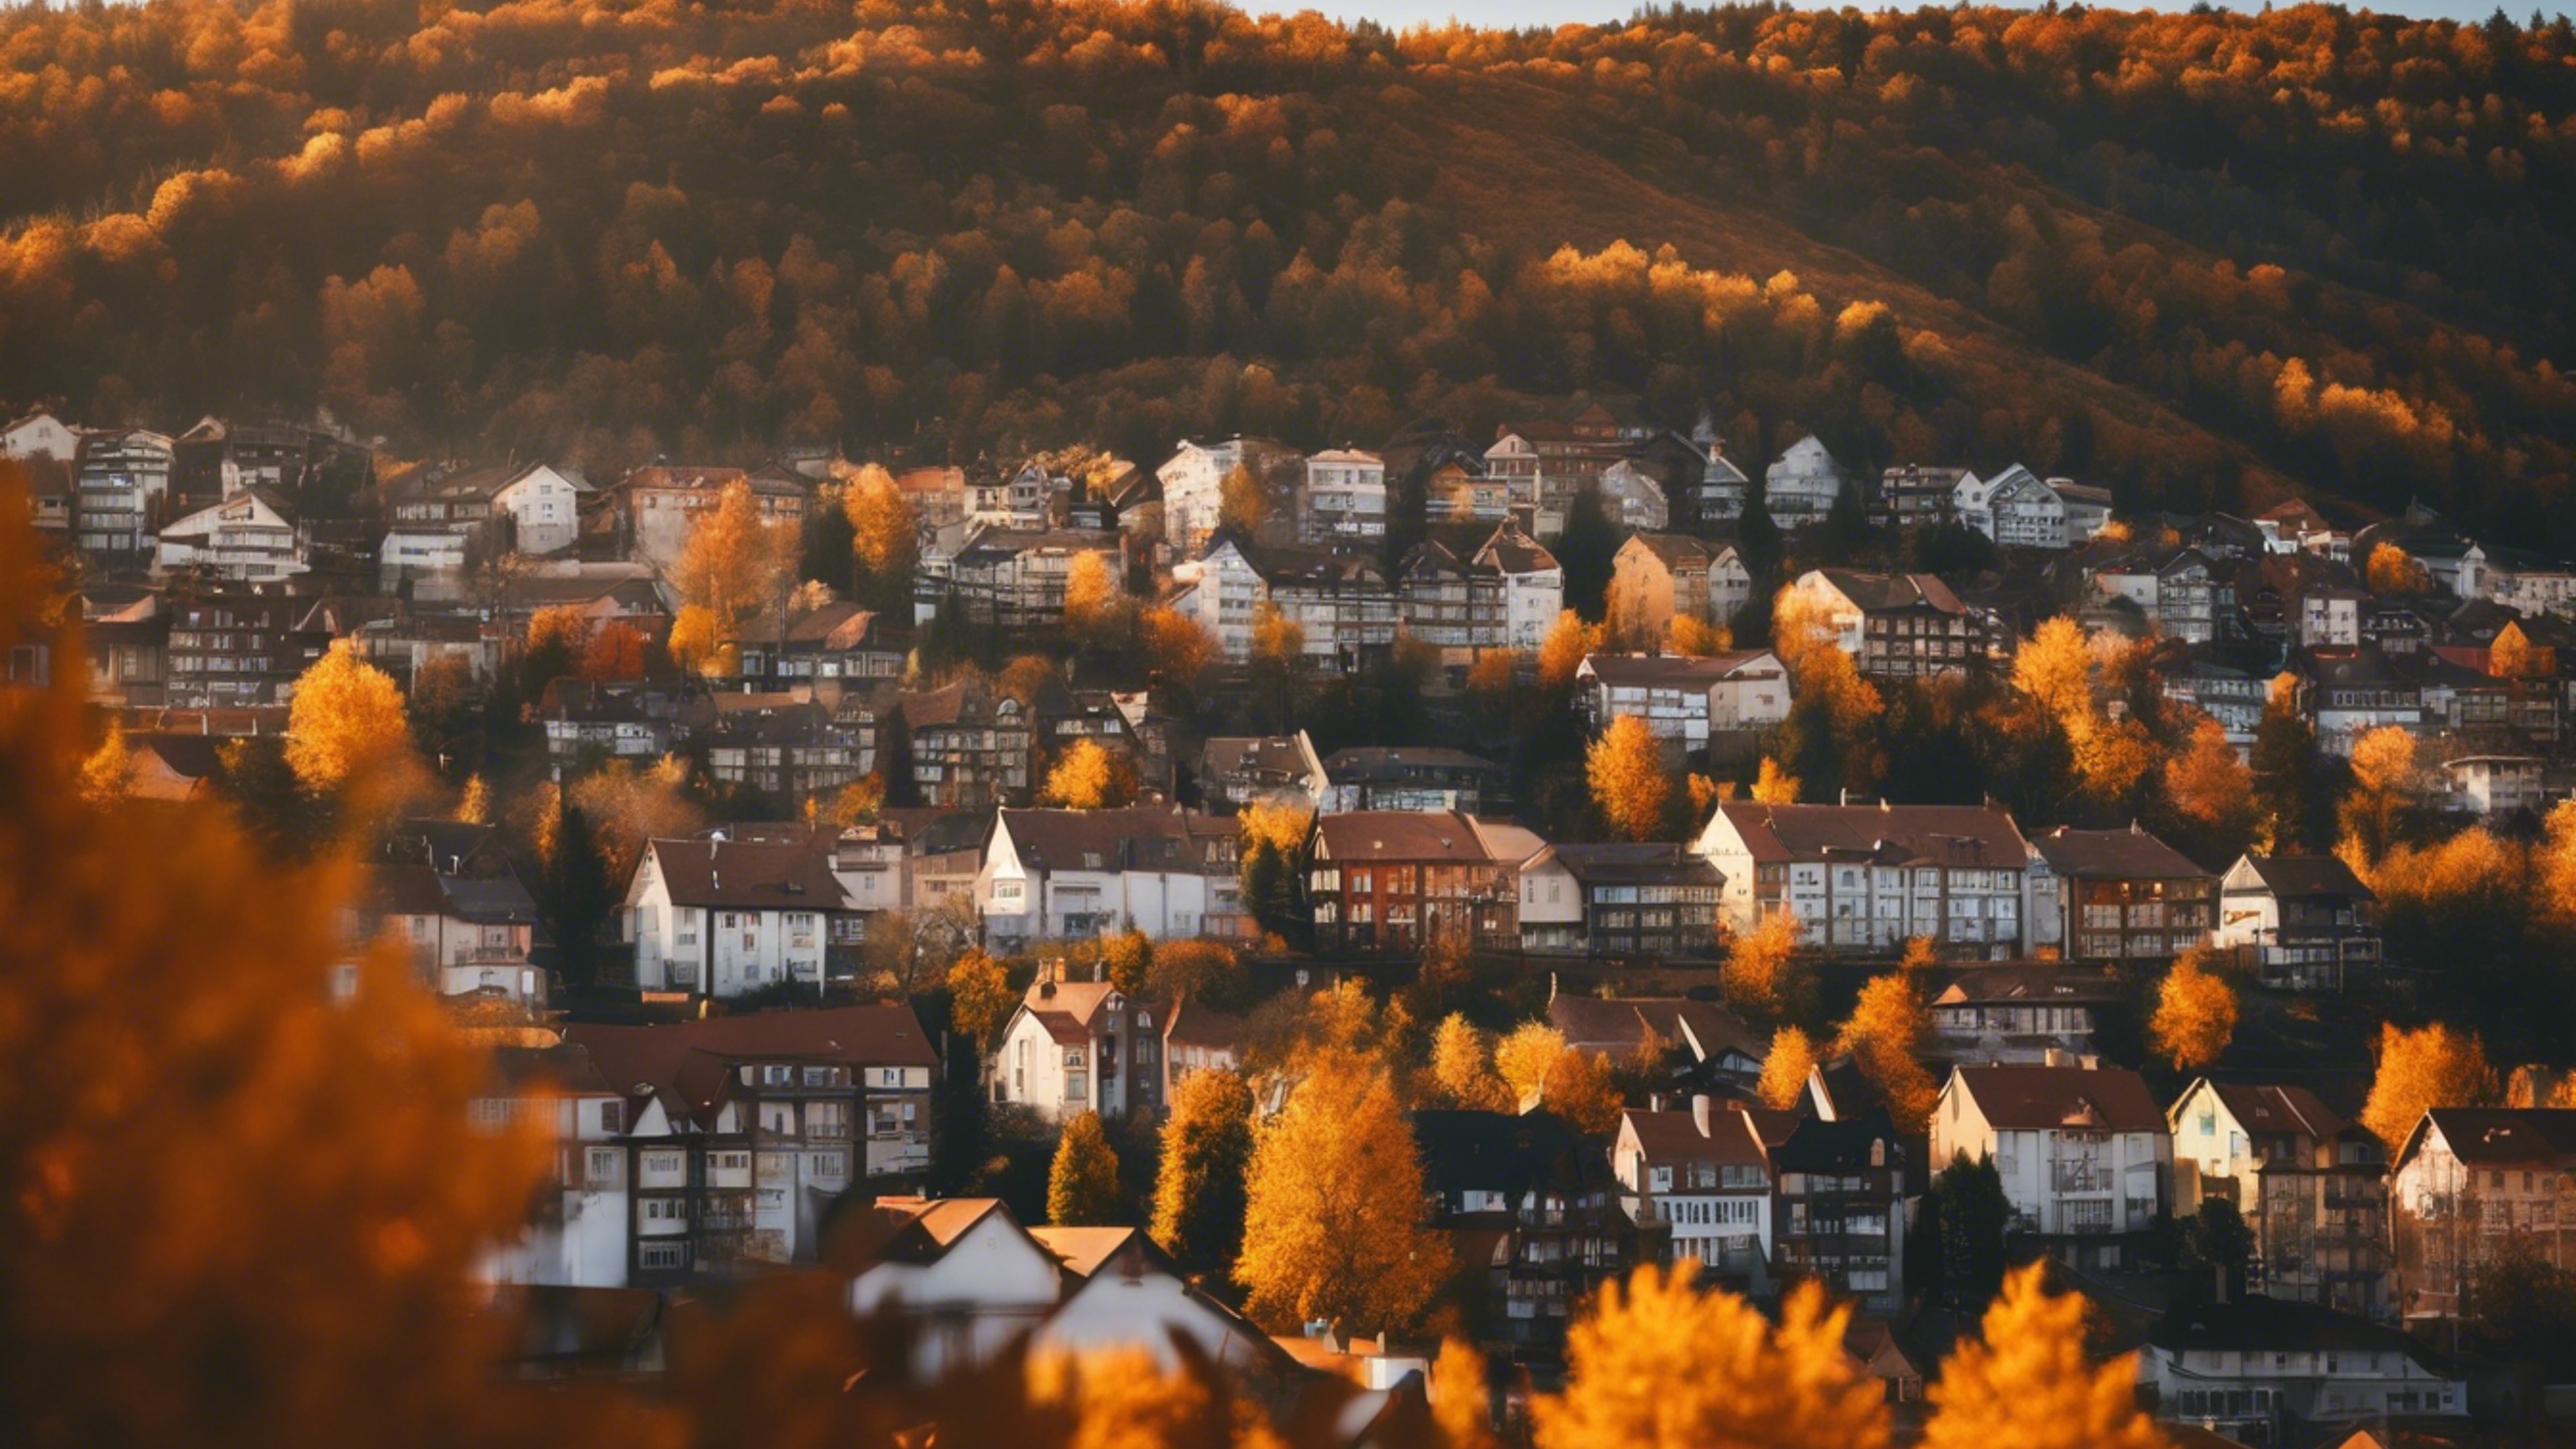 A calm skyline view of a mountain town in autumn, dappled in hues of orange and gold. duvar kağıdı[cb2d4b5eada64efeb989]